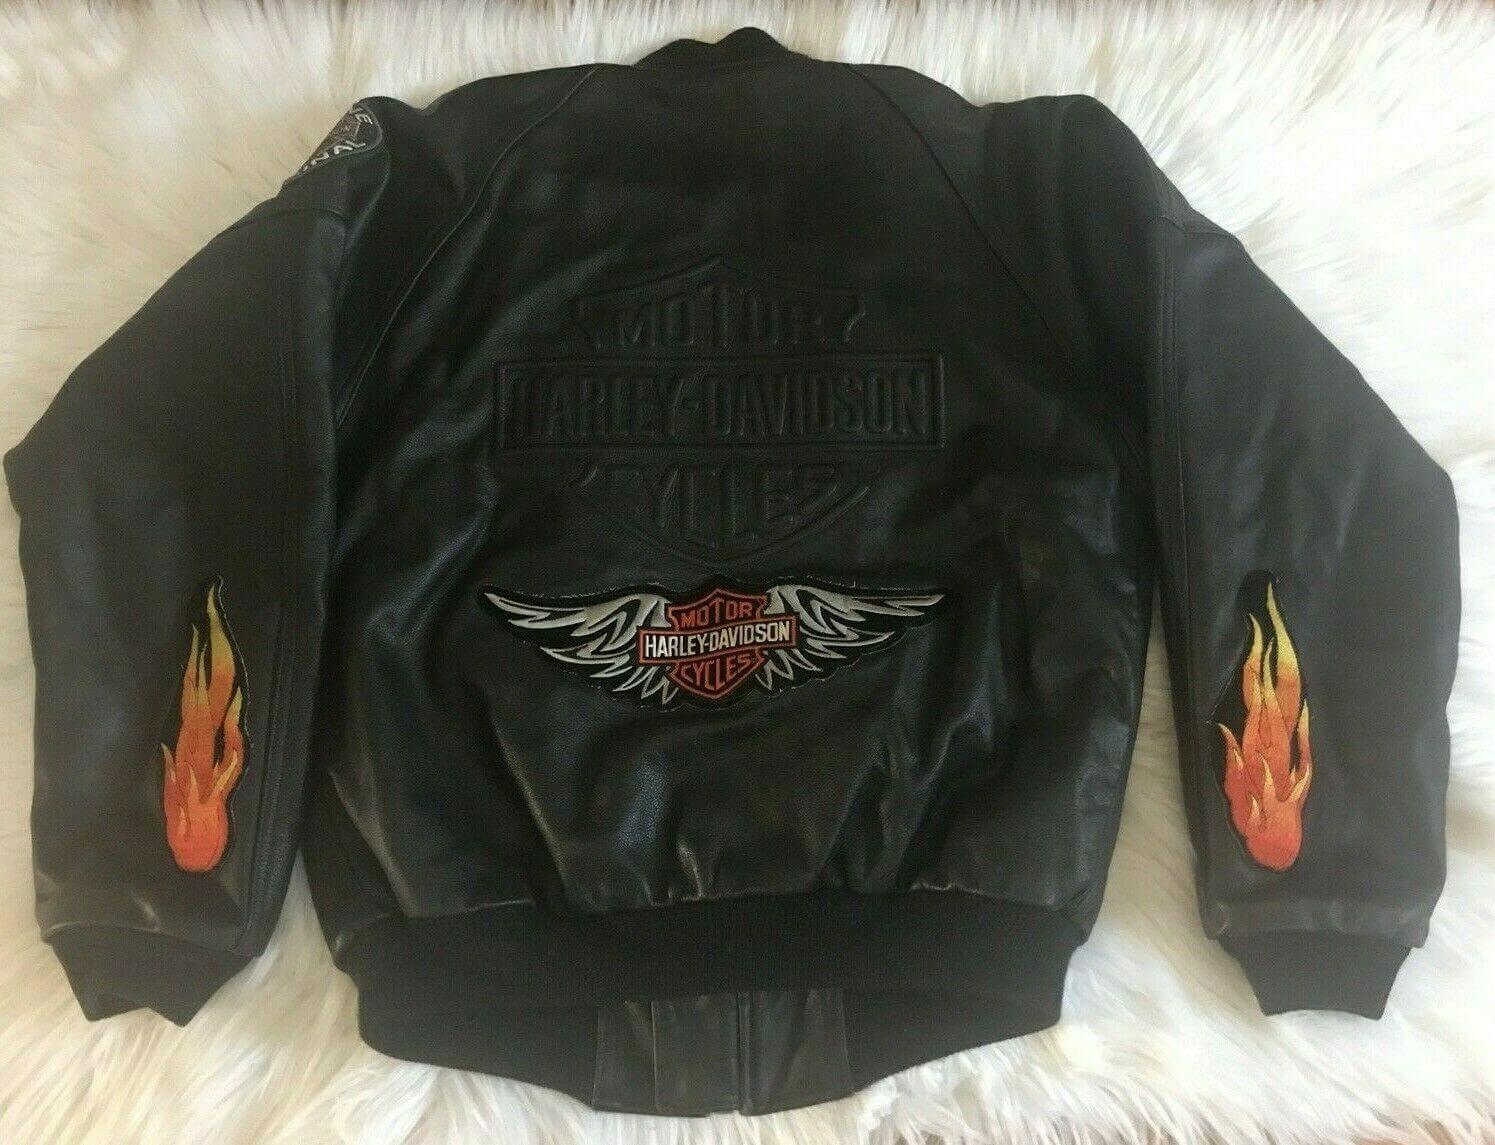 Harley Davidson Gulf War Patch Flame Leather Jacket - Maker of Jacket